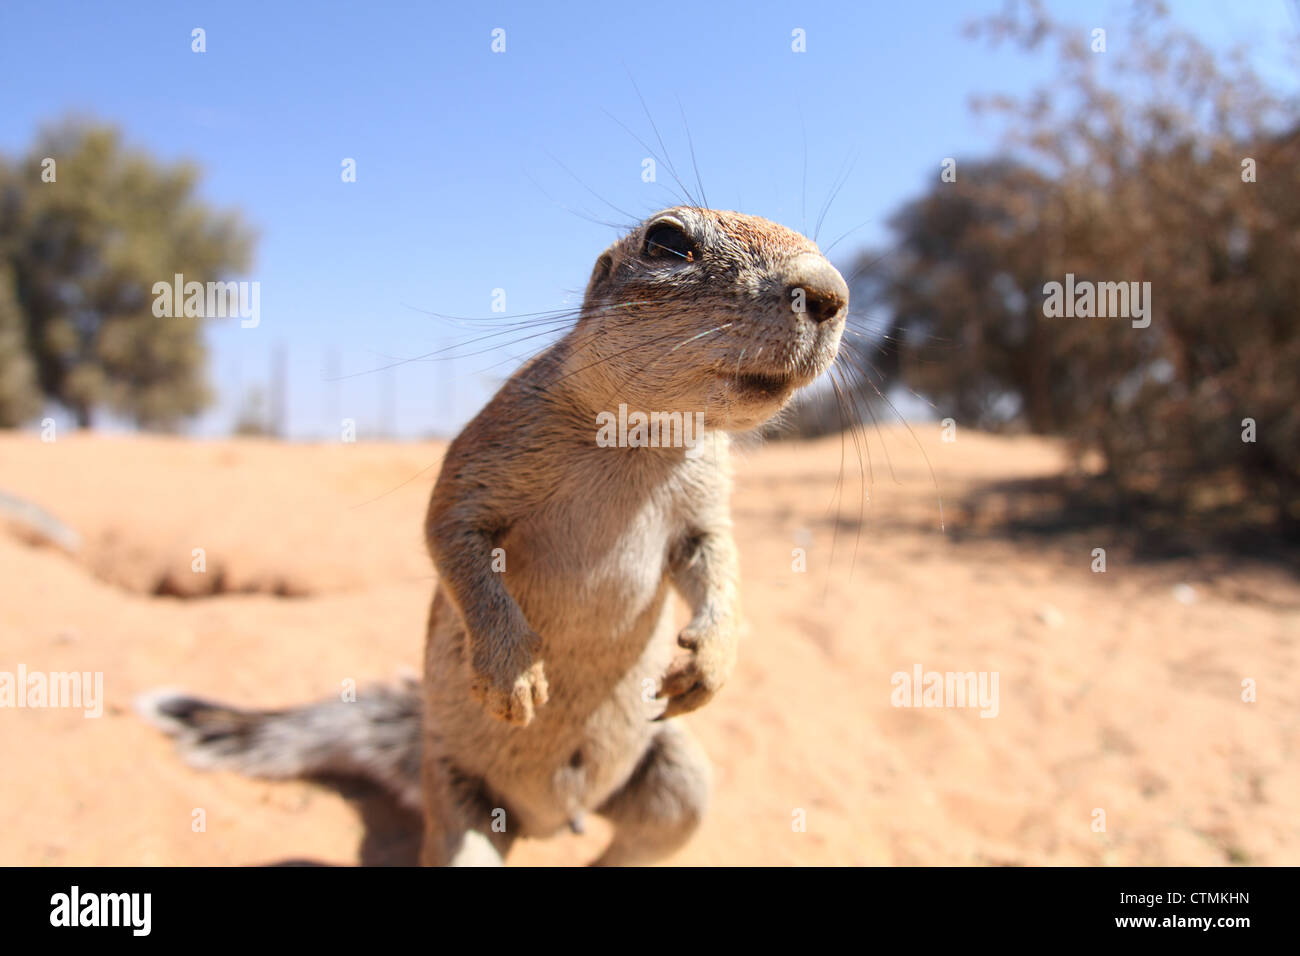 Curious Ground Squirrel, Mata mata Camp, Kgalagadi Park, South Africa Stock Photo